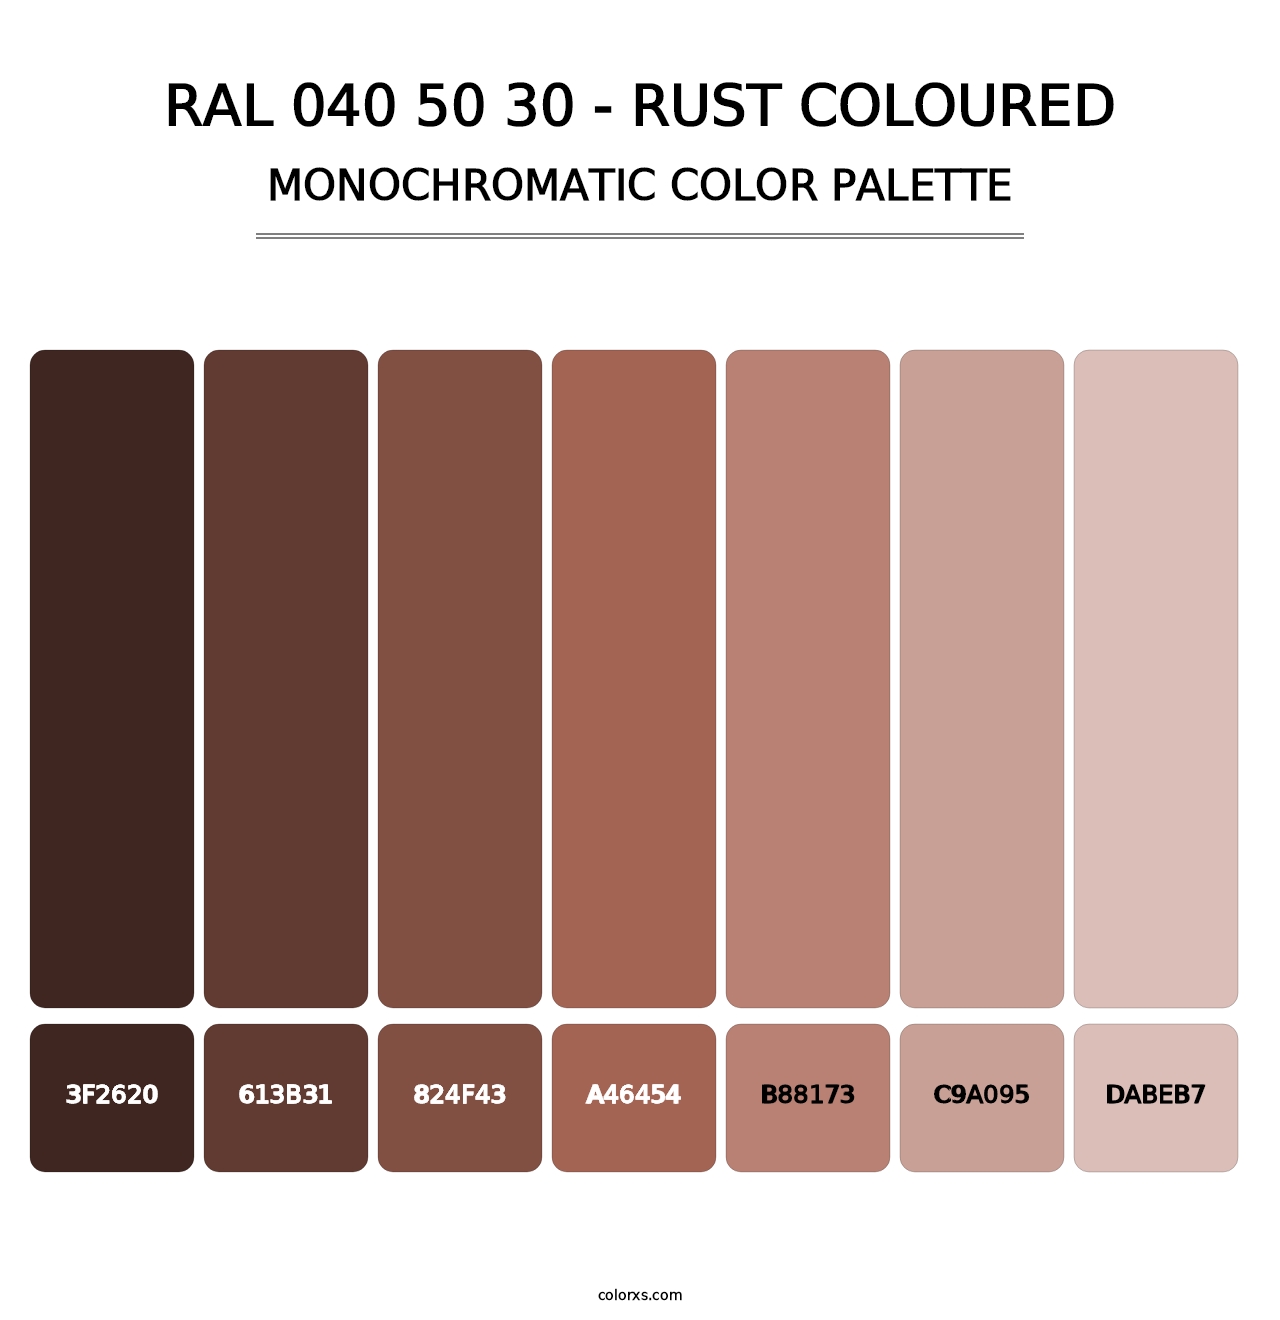 RAL 040 50 30 - Rust Coloured - Monochromatic Color Palette